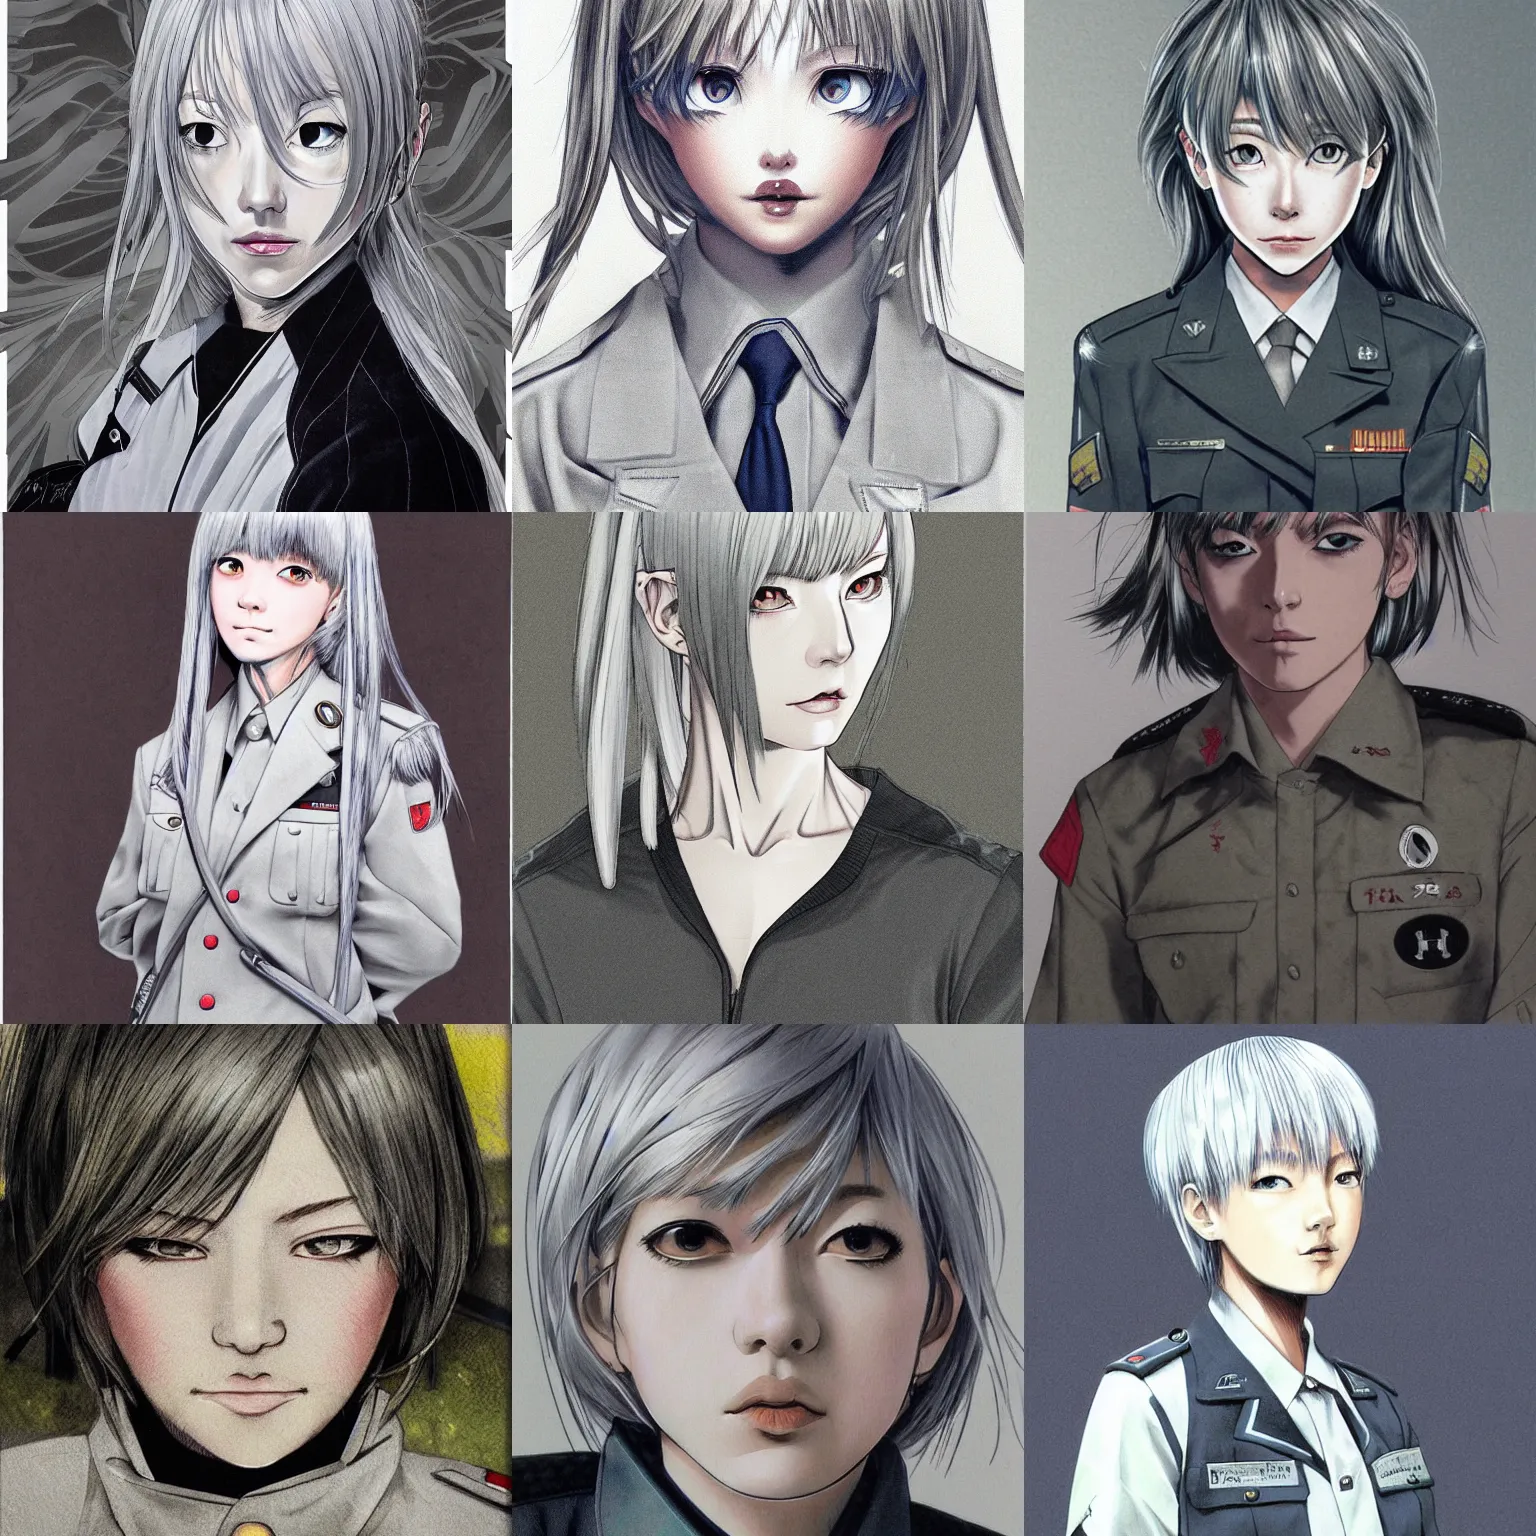 Prompt: silver hair girl, multicam uniform, portrait ilustration by Takehiko Inoue